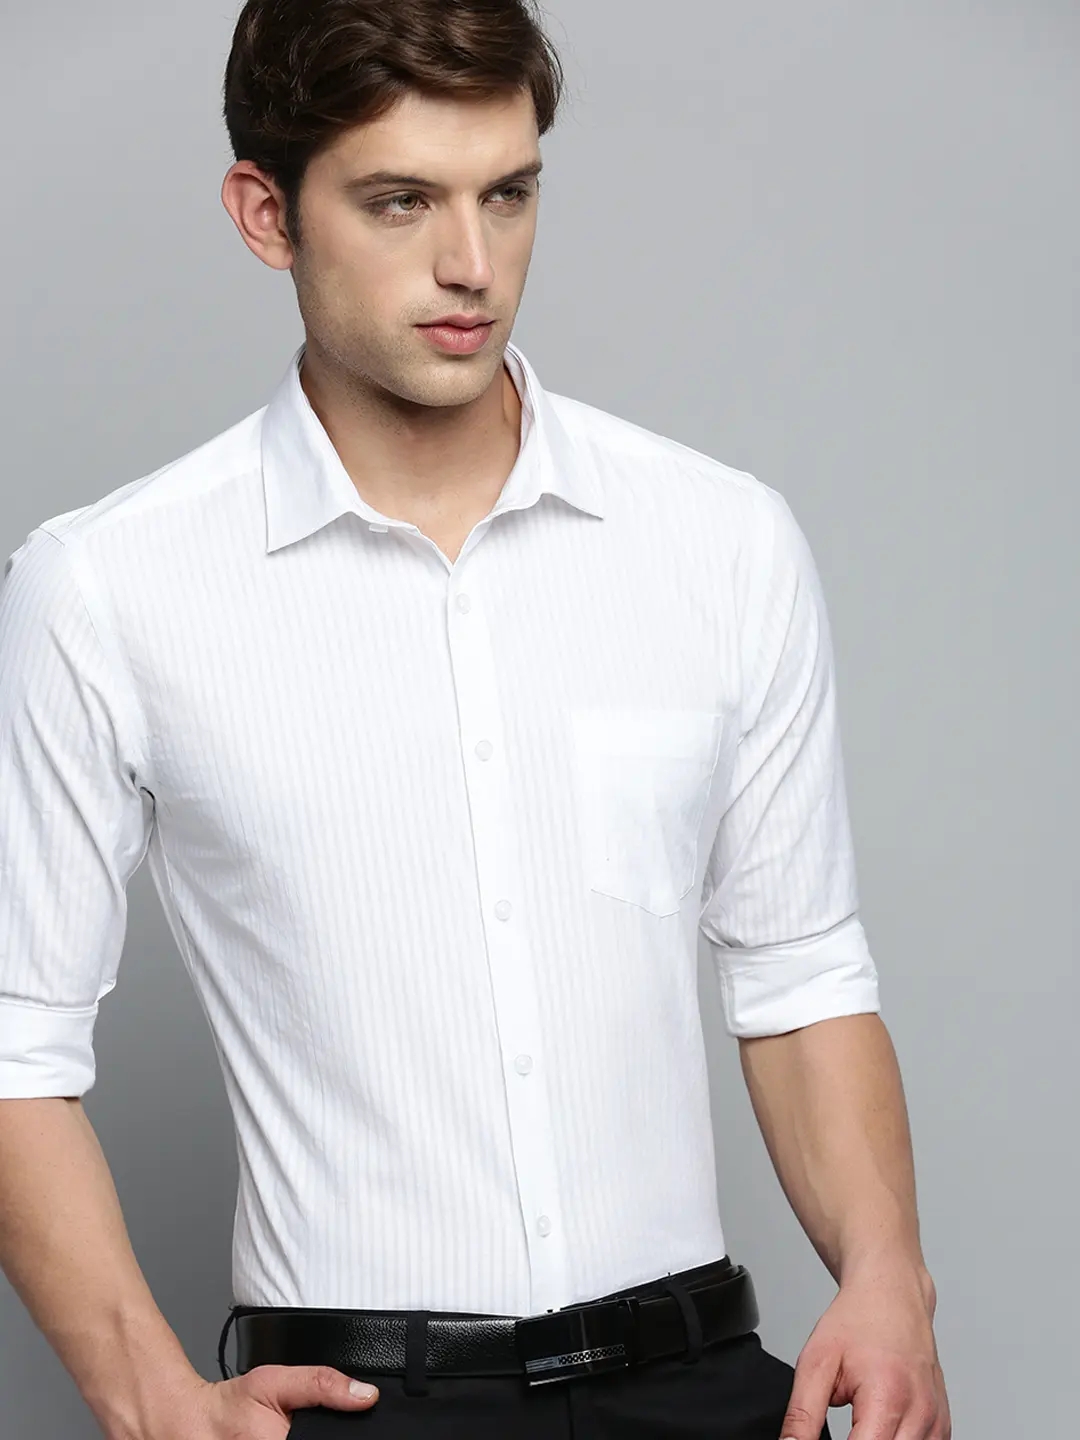 SHOWOFF Men's Spread Collar Solid White Smart Shirt